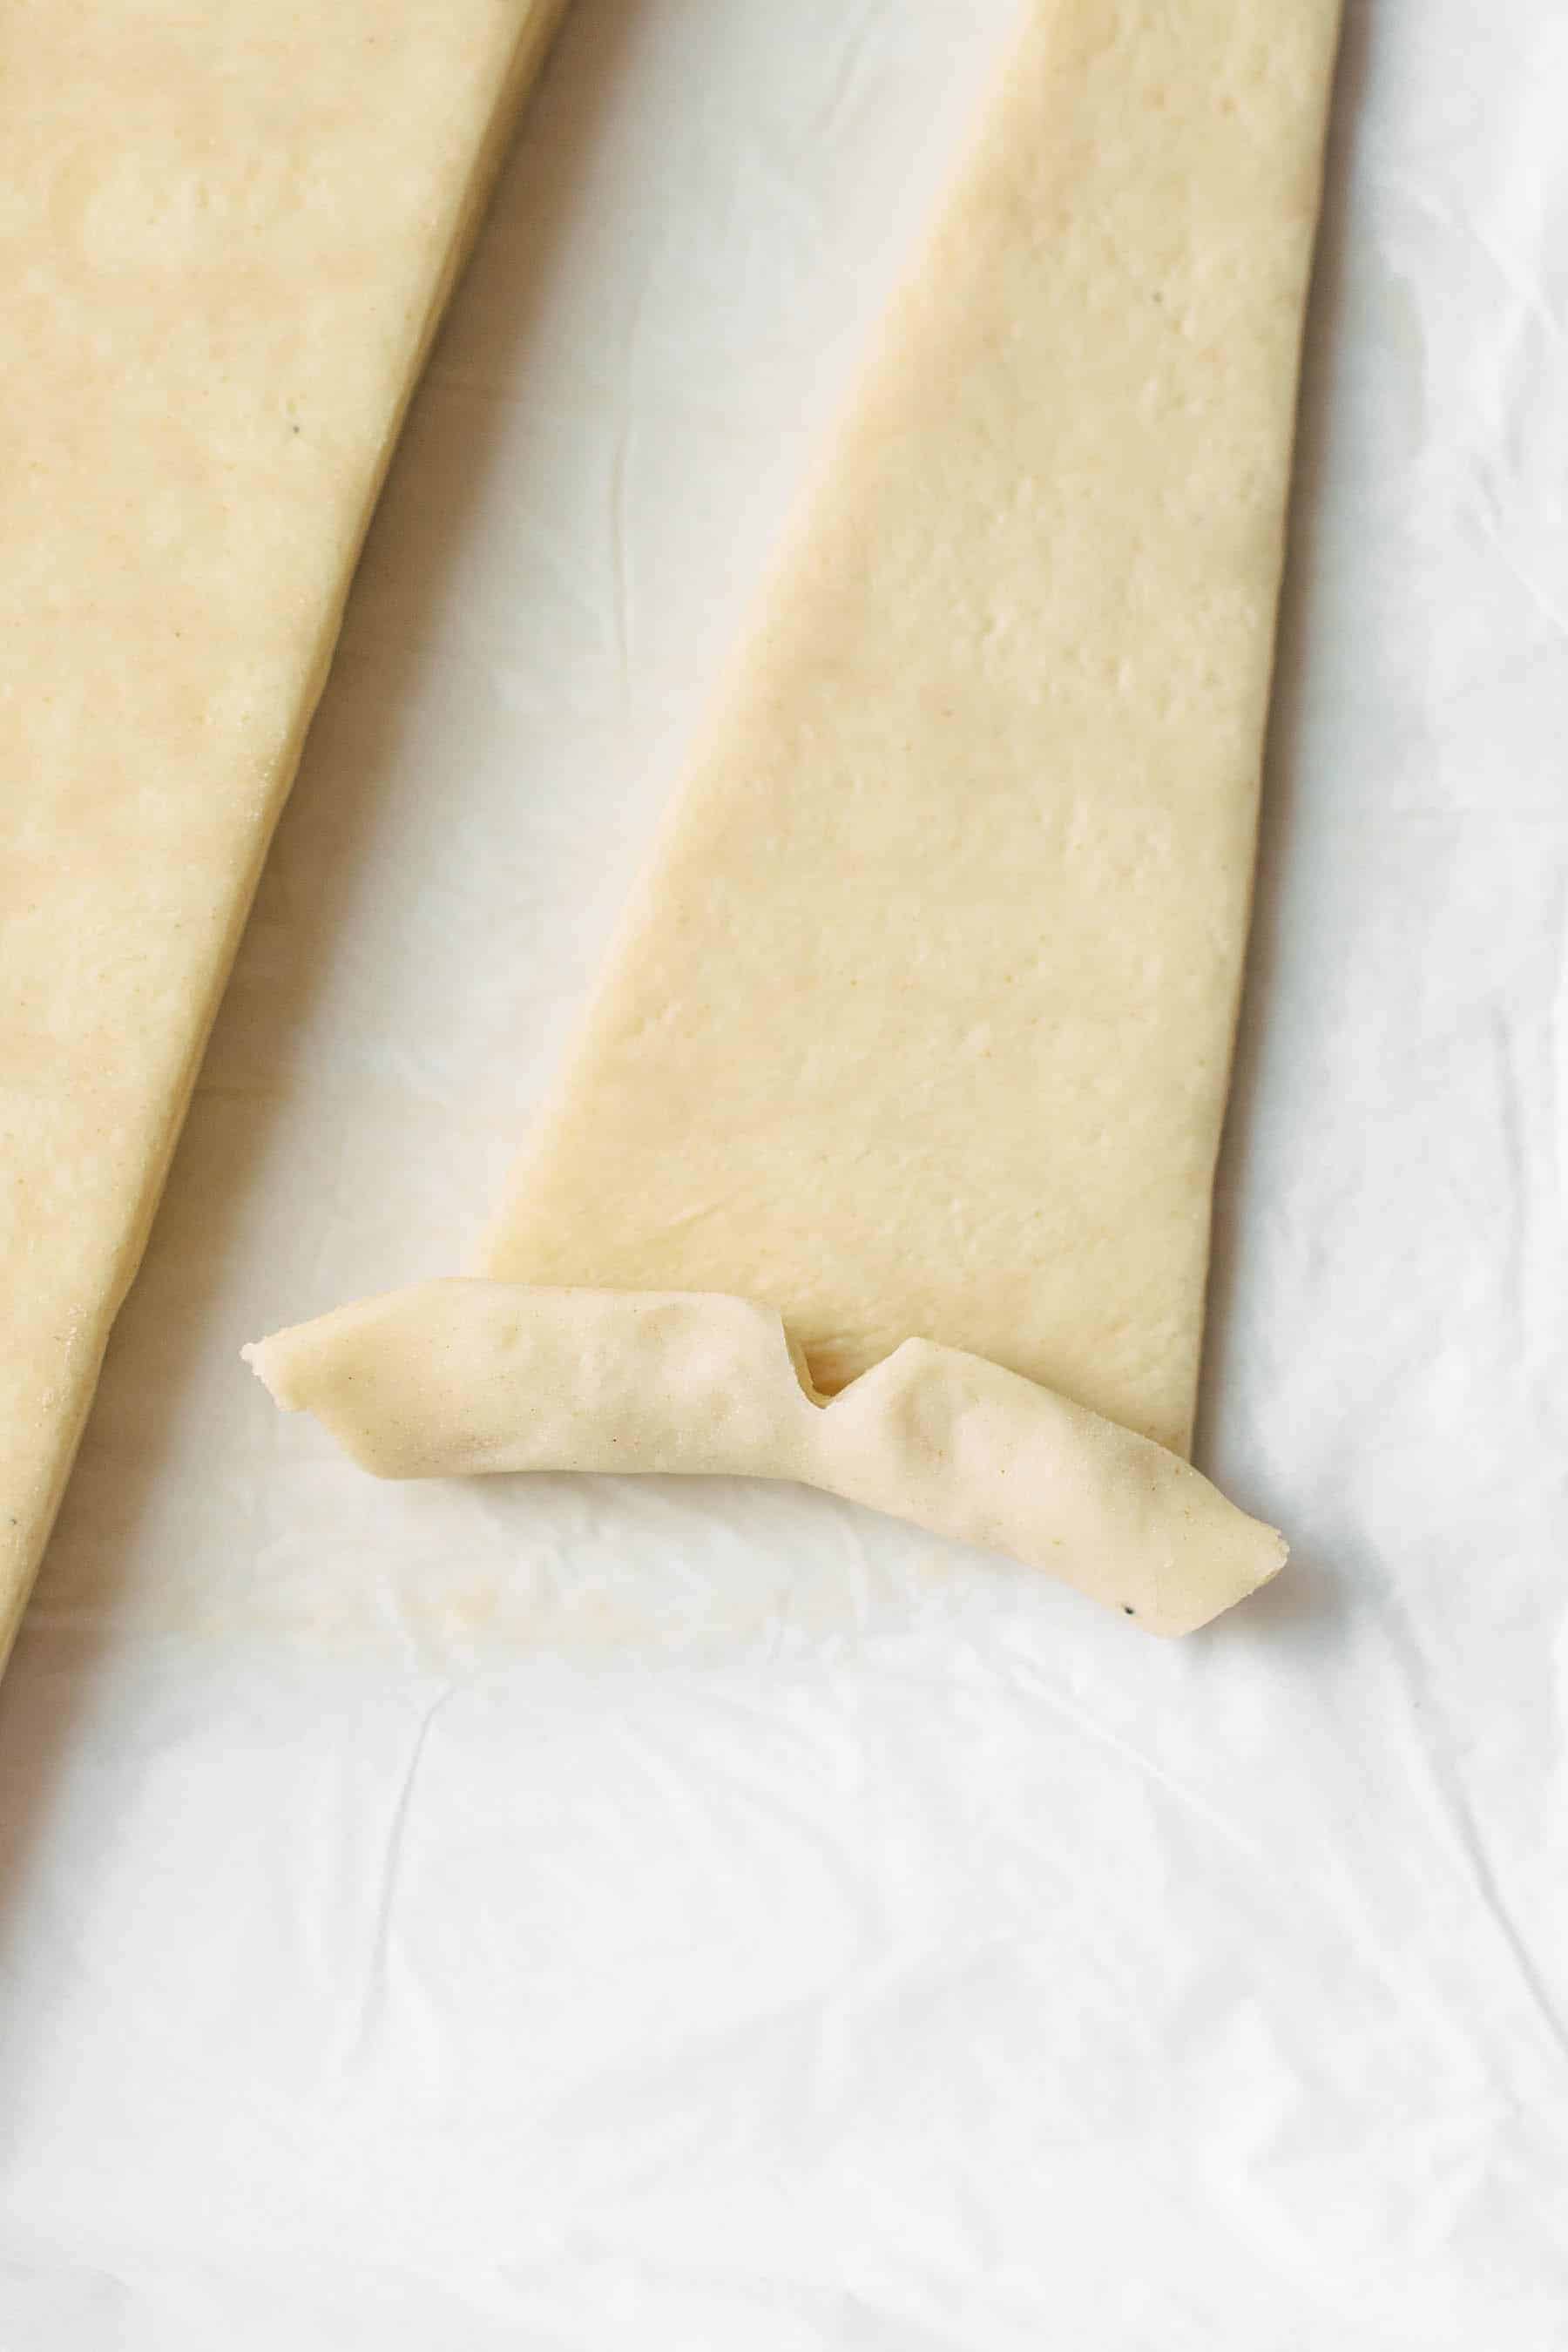 cut puff pastry dough cut into a triangle